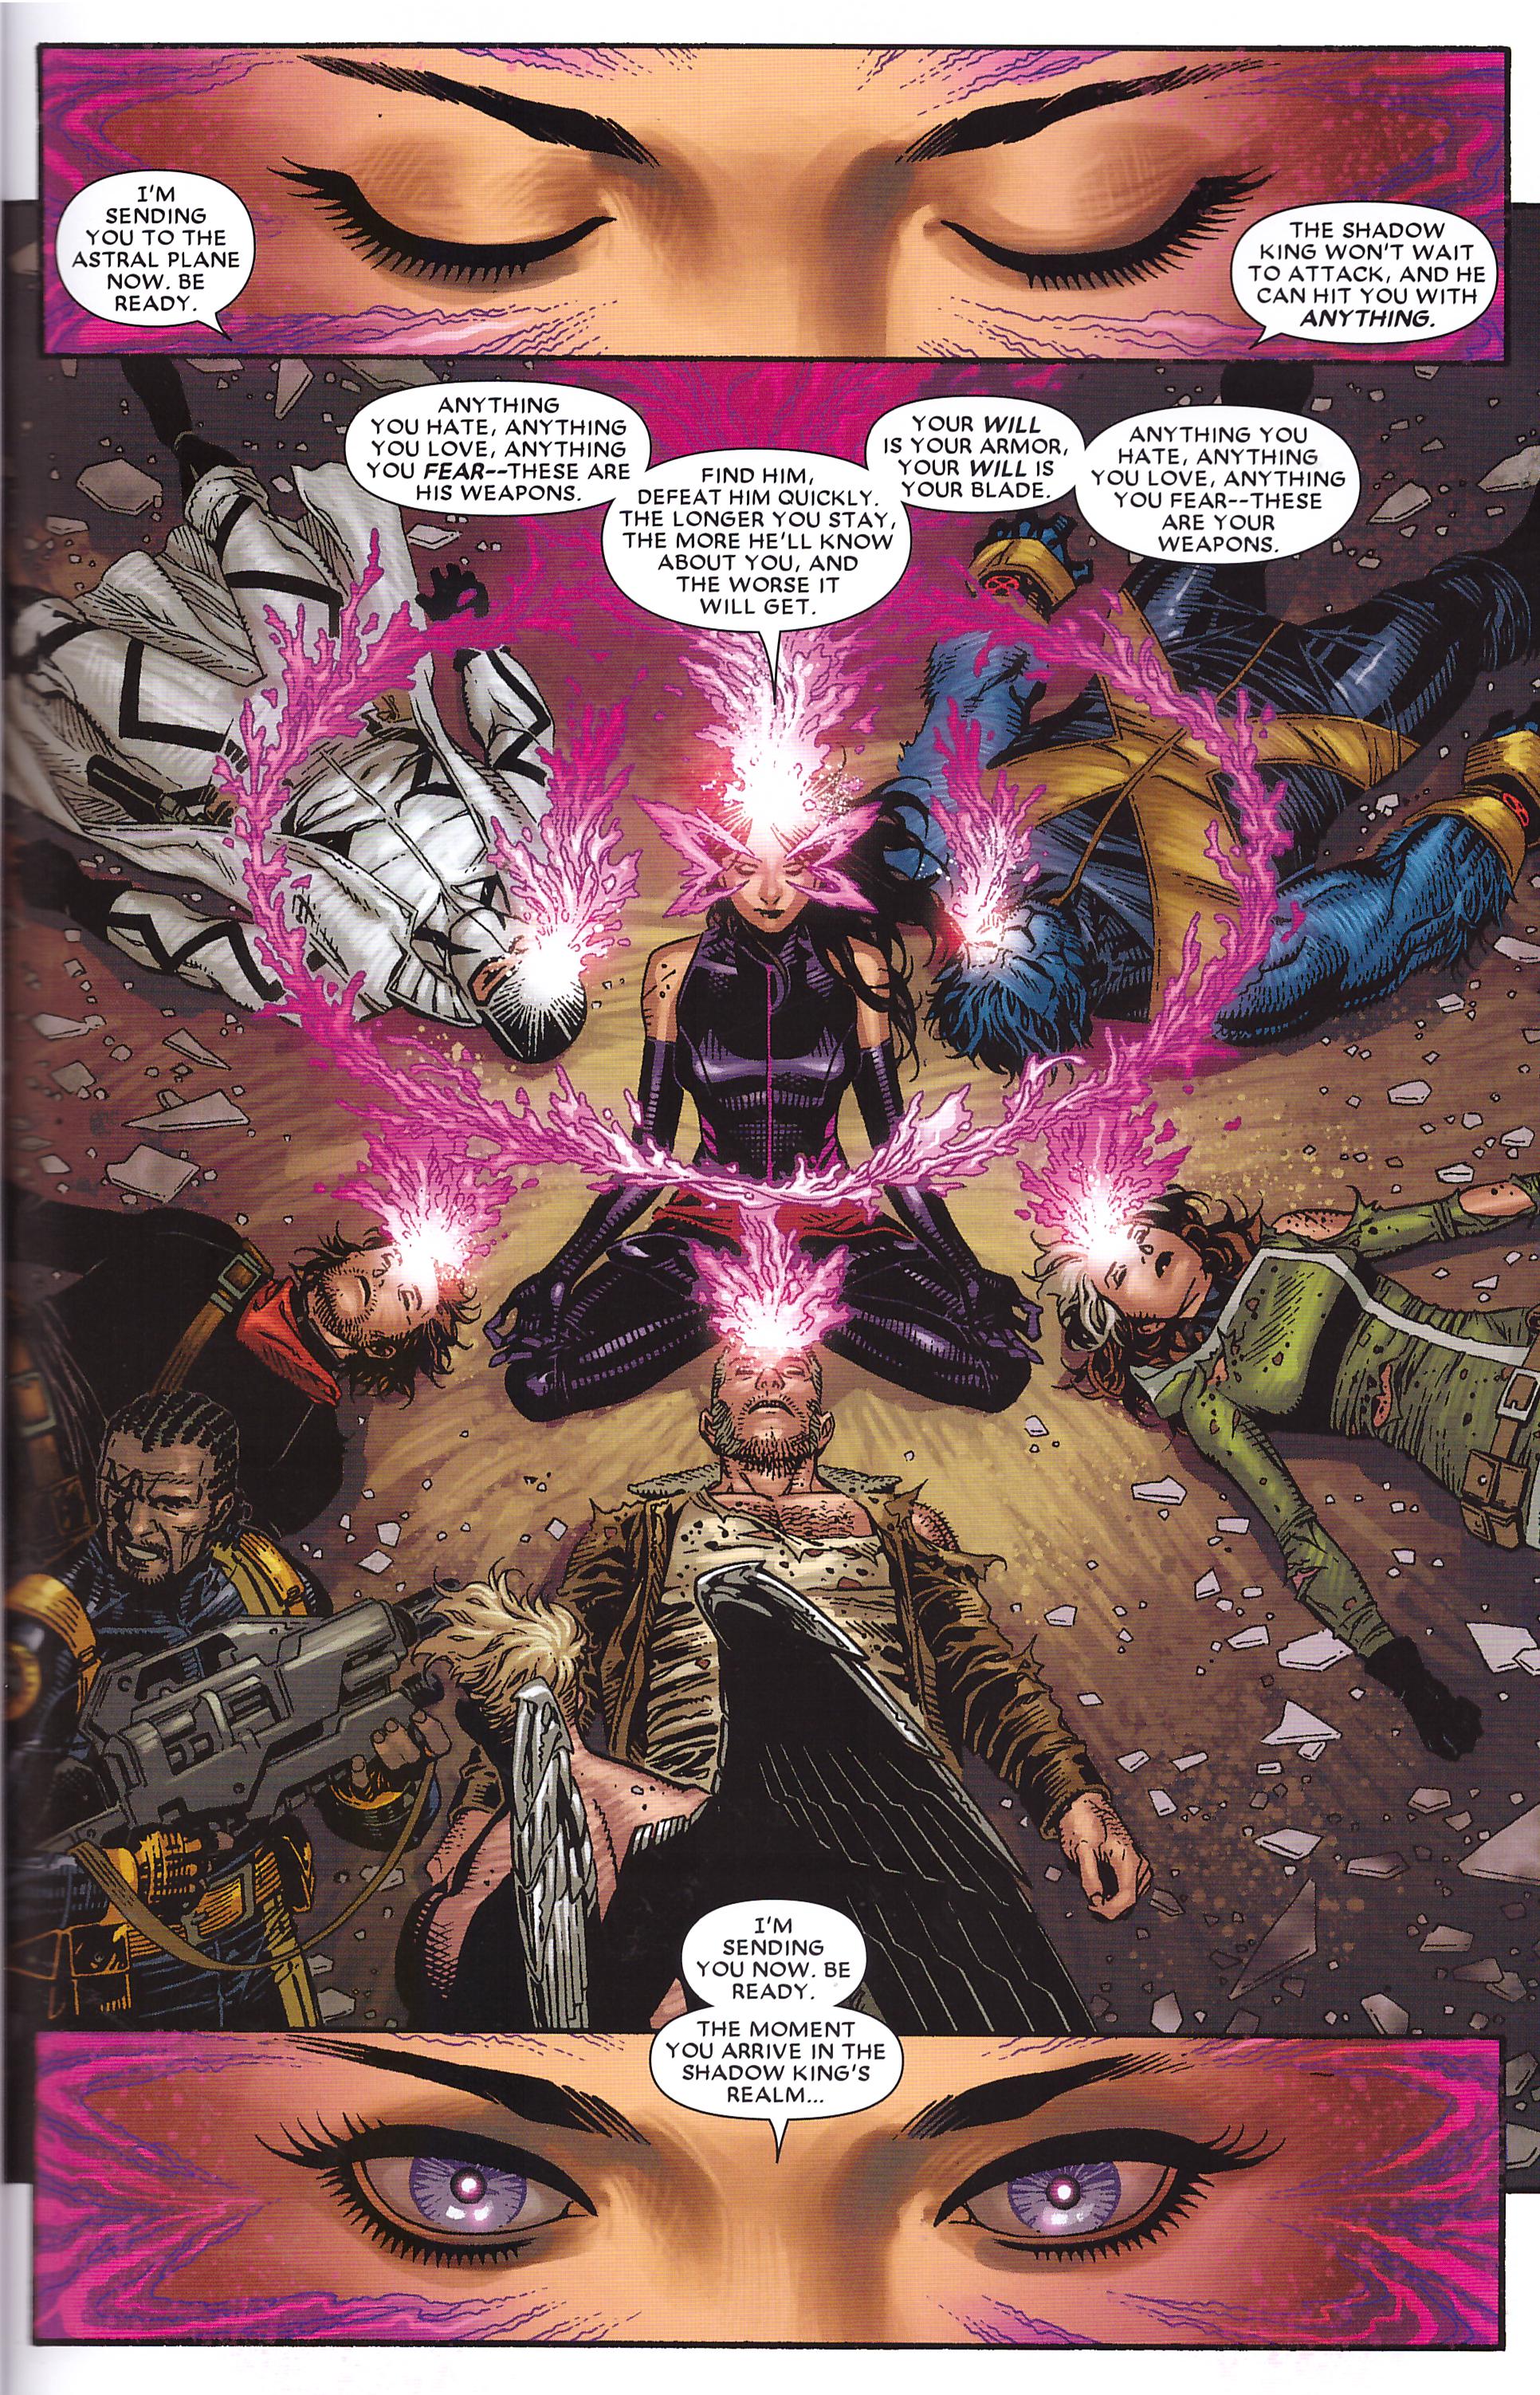 Astonishing X-Men Life of X review